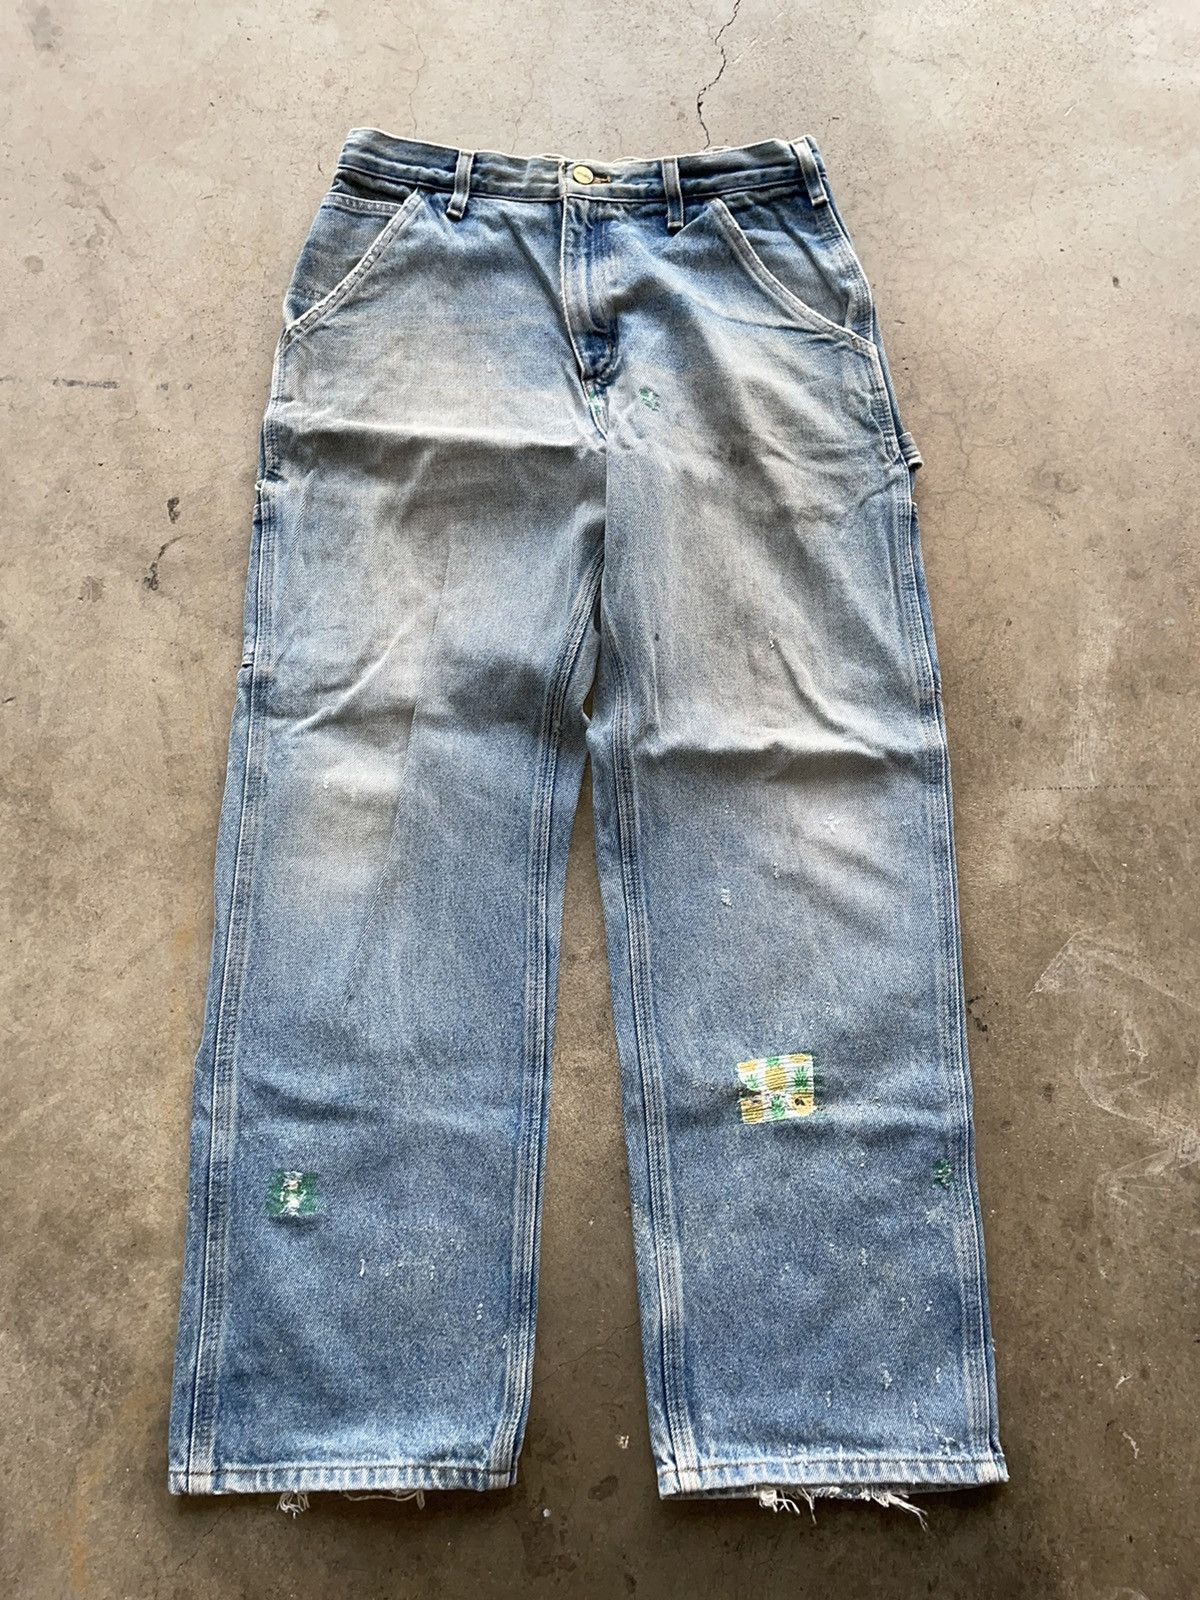 Vintage Vintage Carhartt Pants Size US 33 - 2 Preview